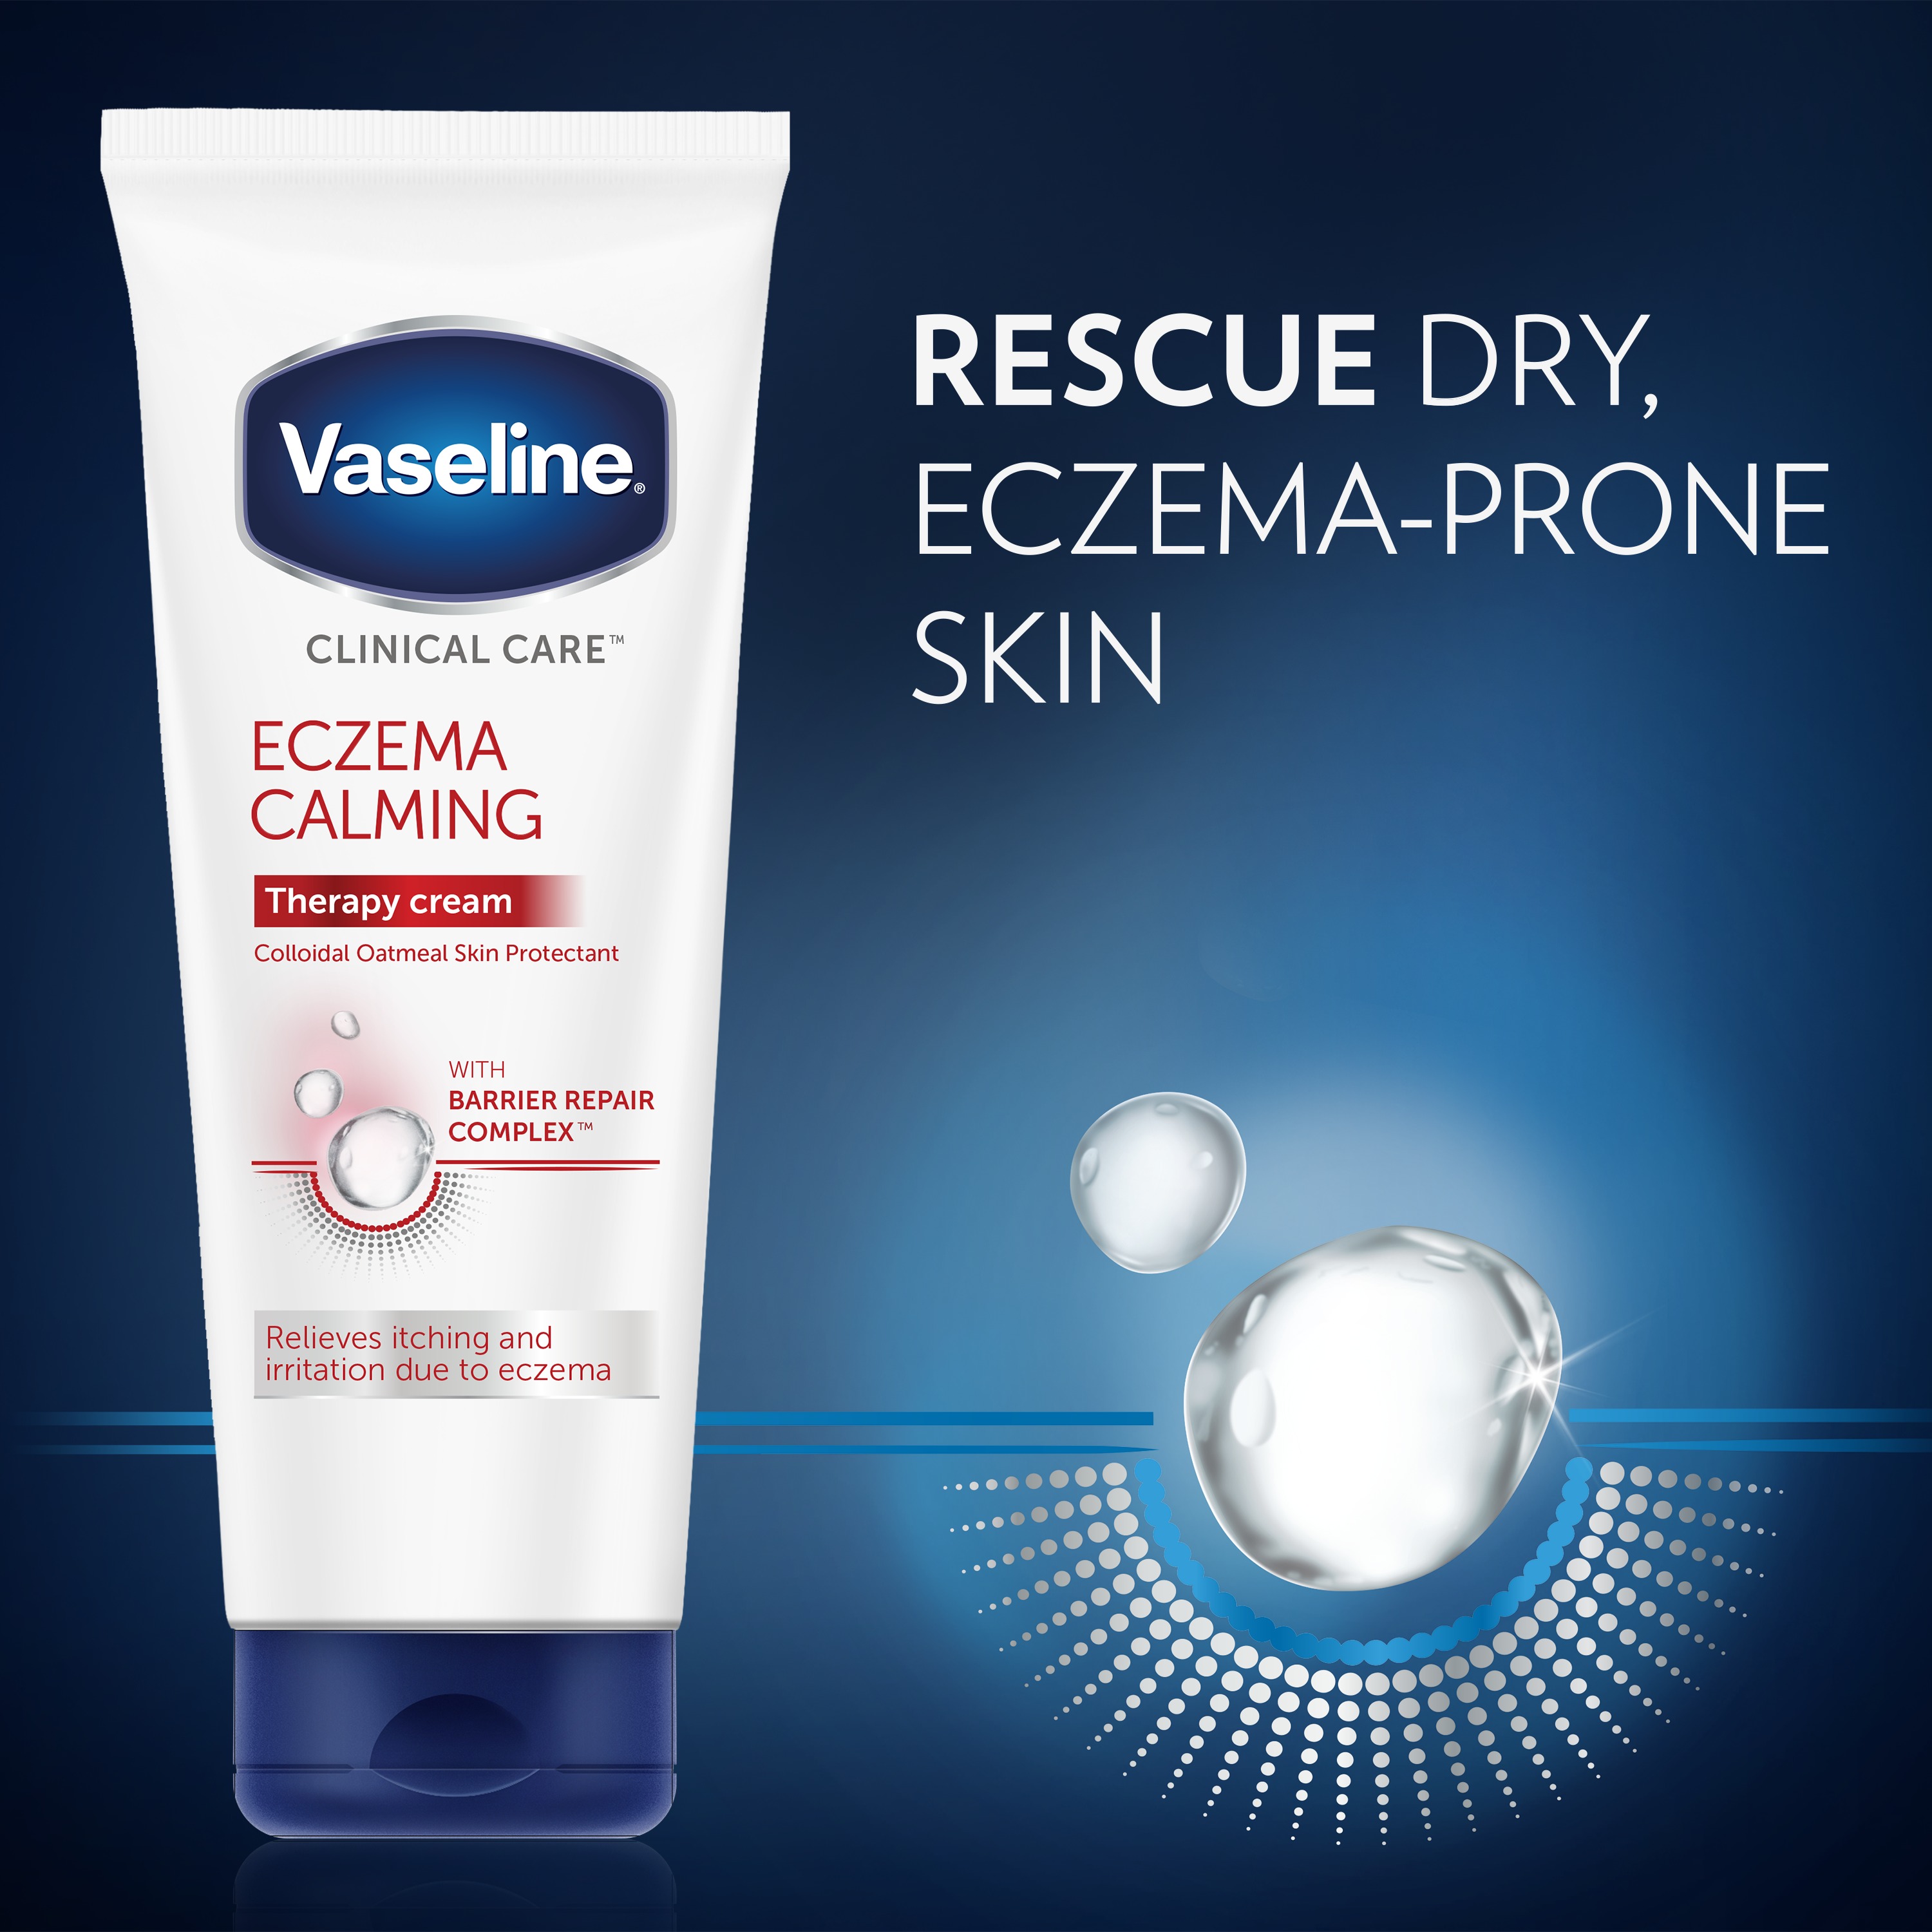 Vaseline Clinical Care Eczema Calming Body Cream, 6.8 oz - image 3 of 16